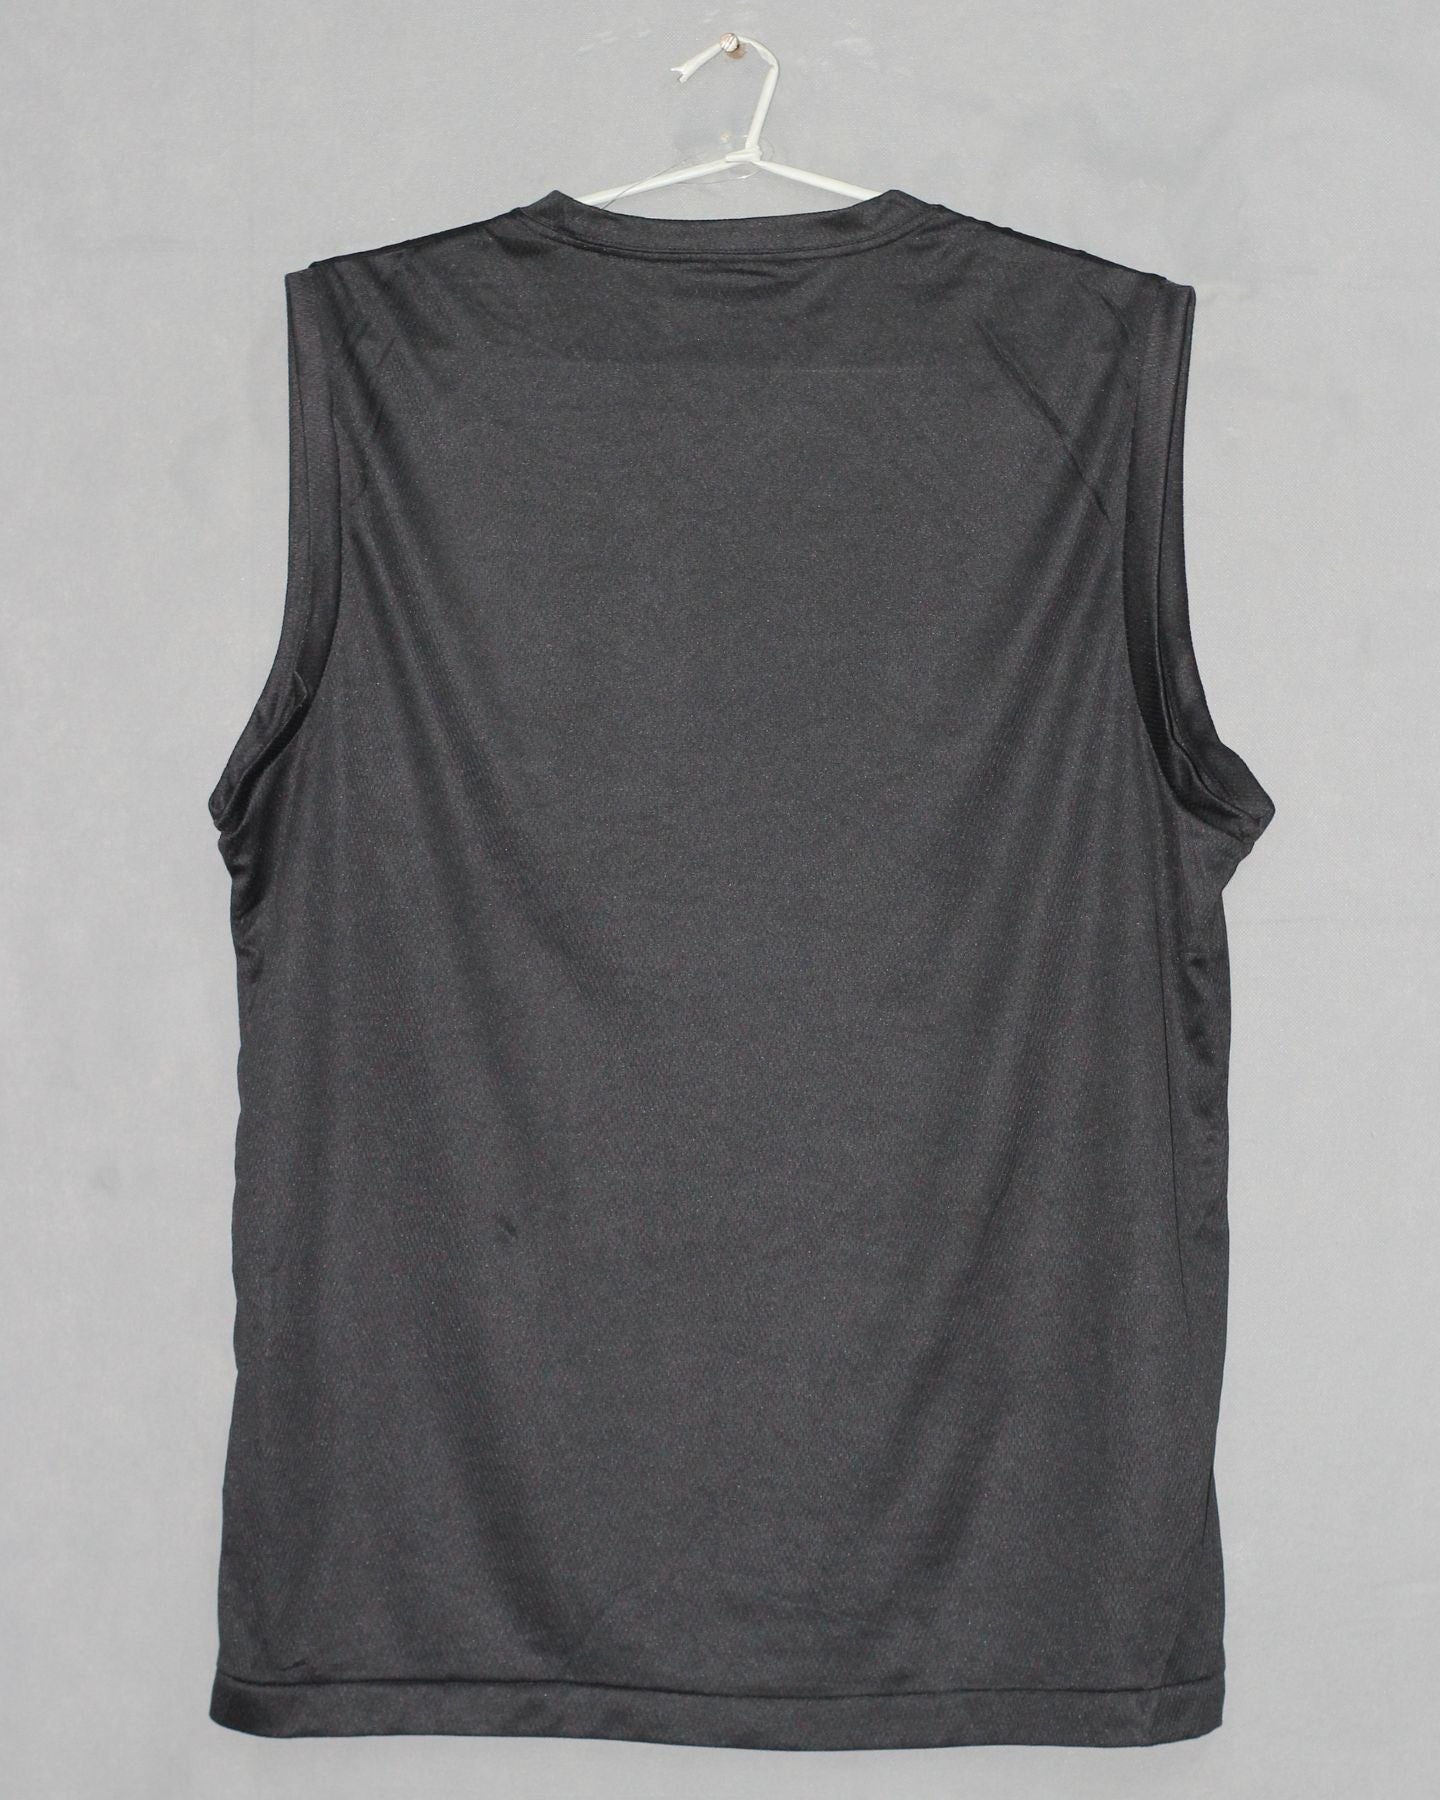 Uniqlo Dry Branded Original For Sports Sleeveless V Neck Men T Shirt